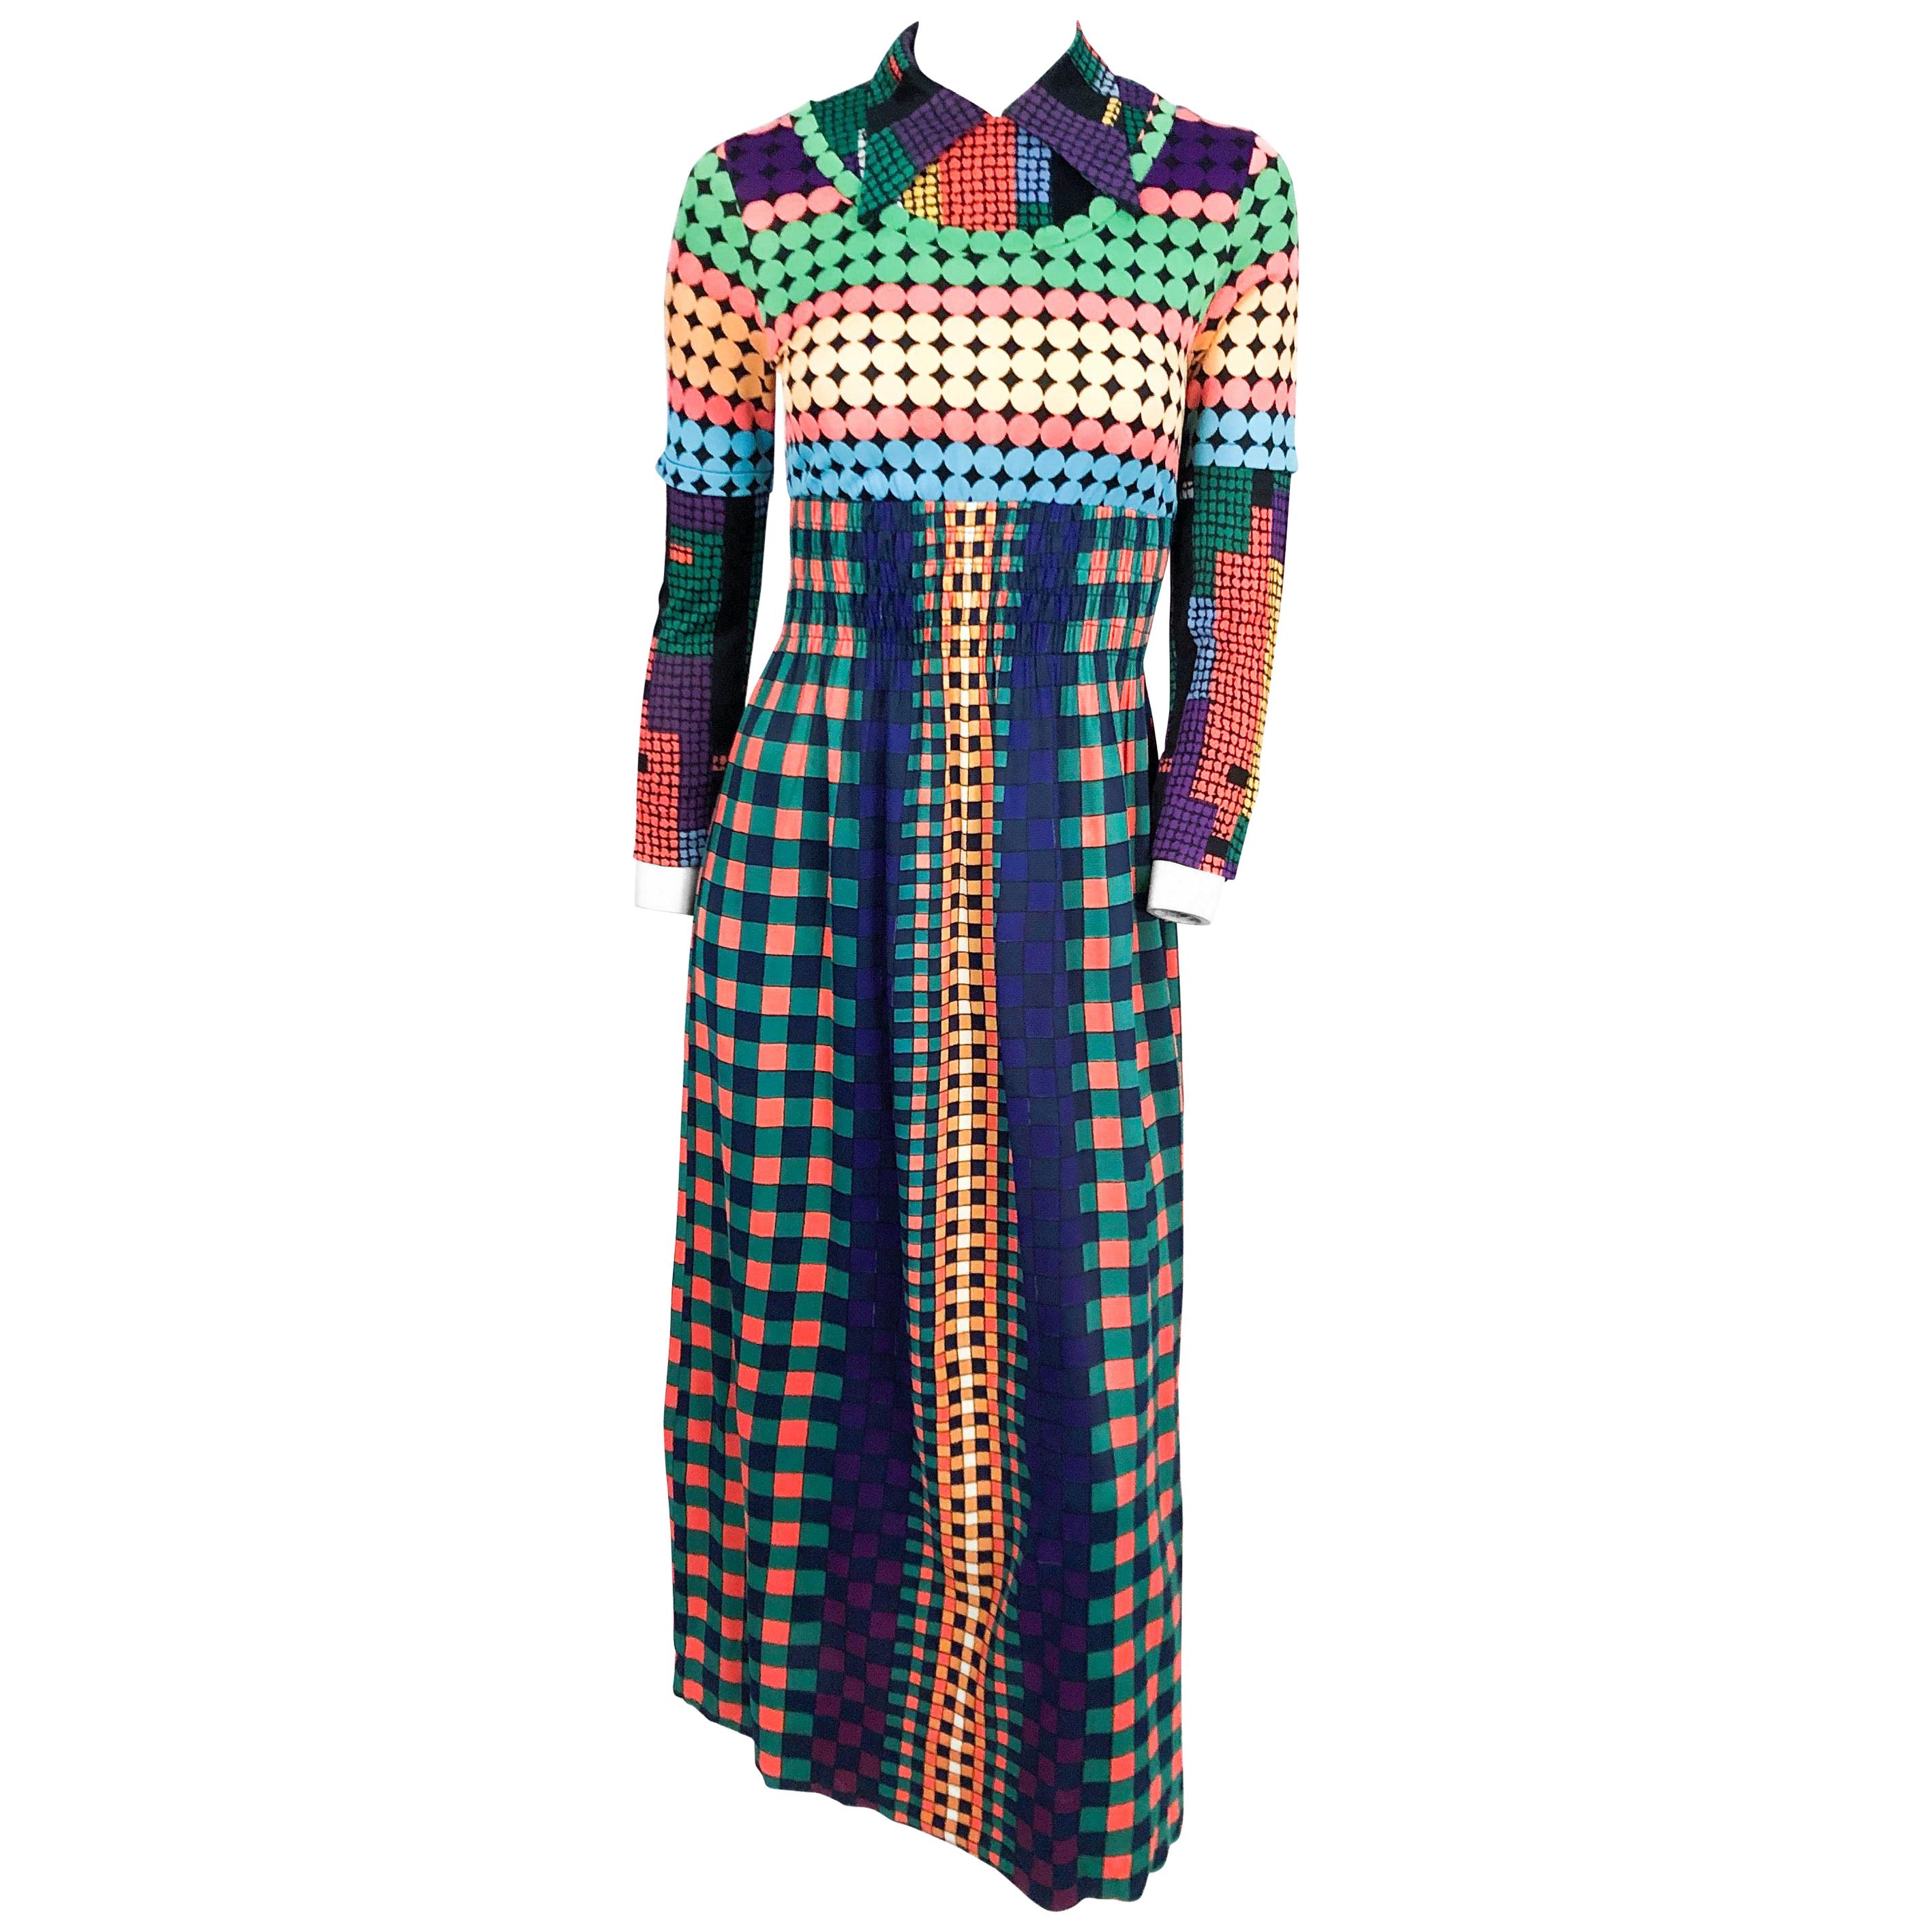 1970s Vibrant Geometric Printed Dress